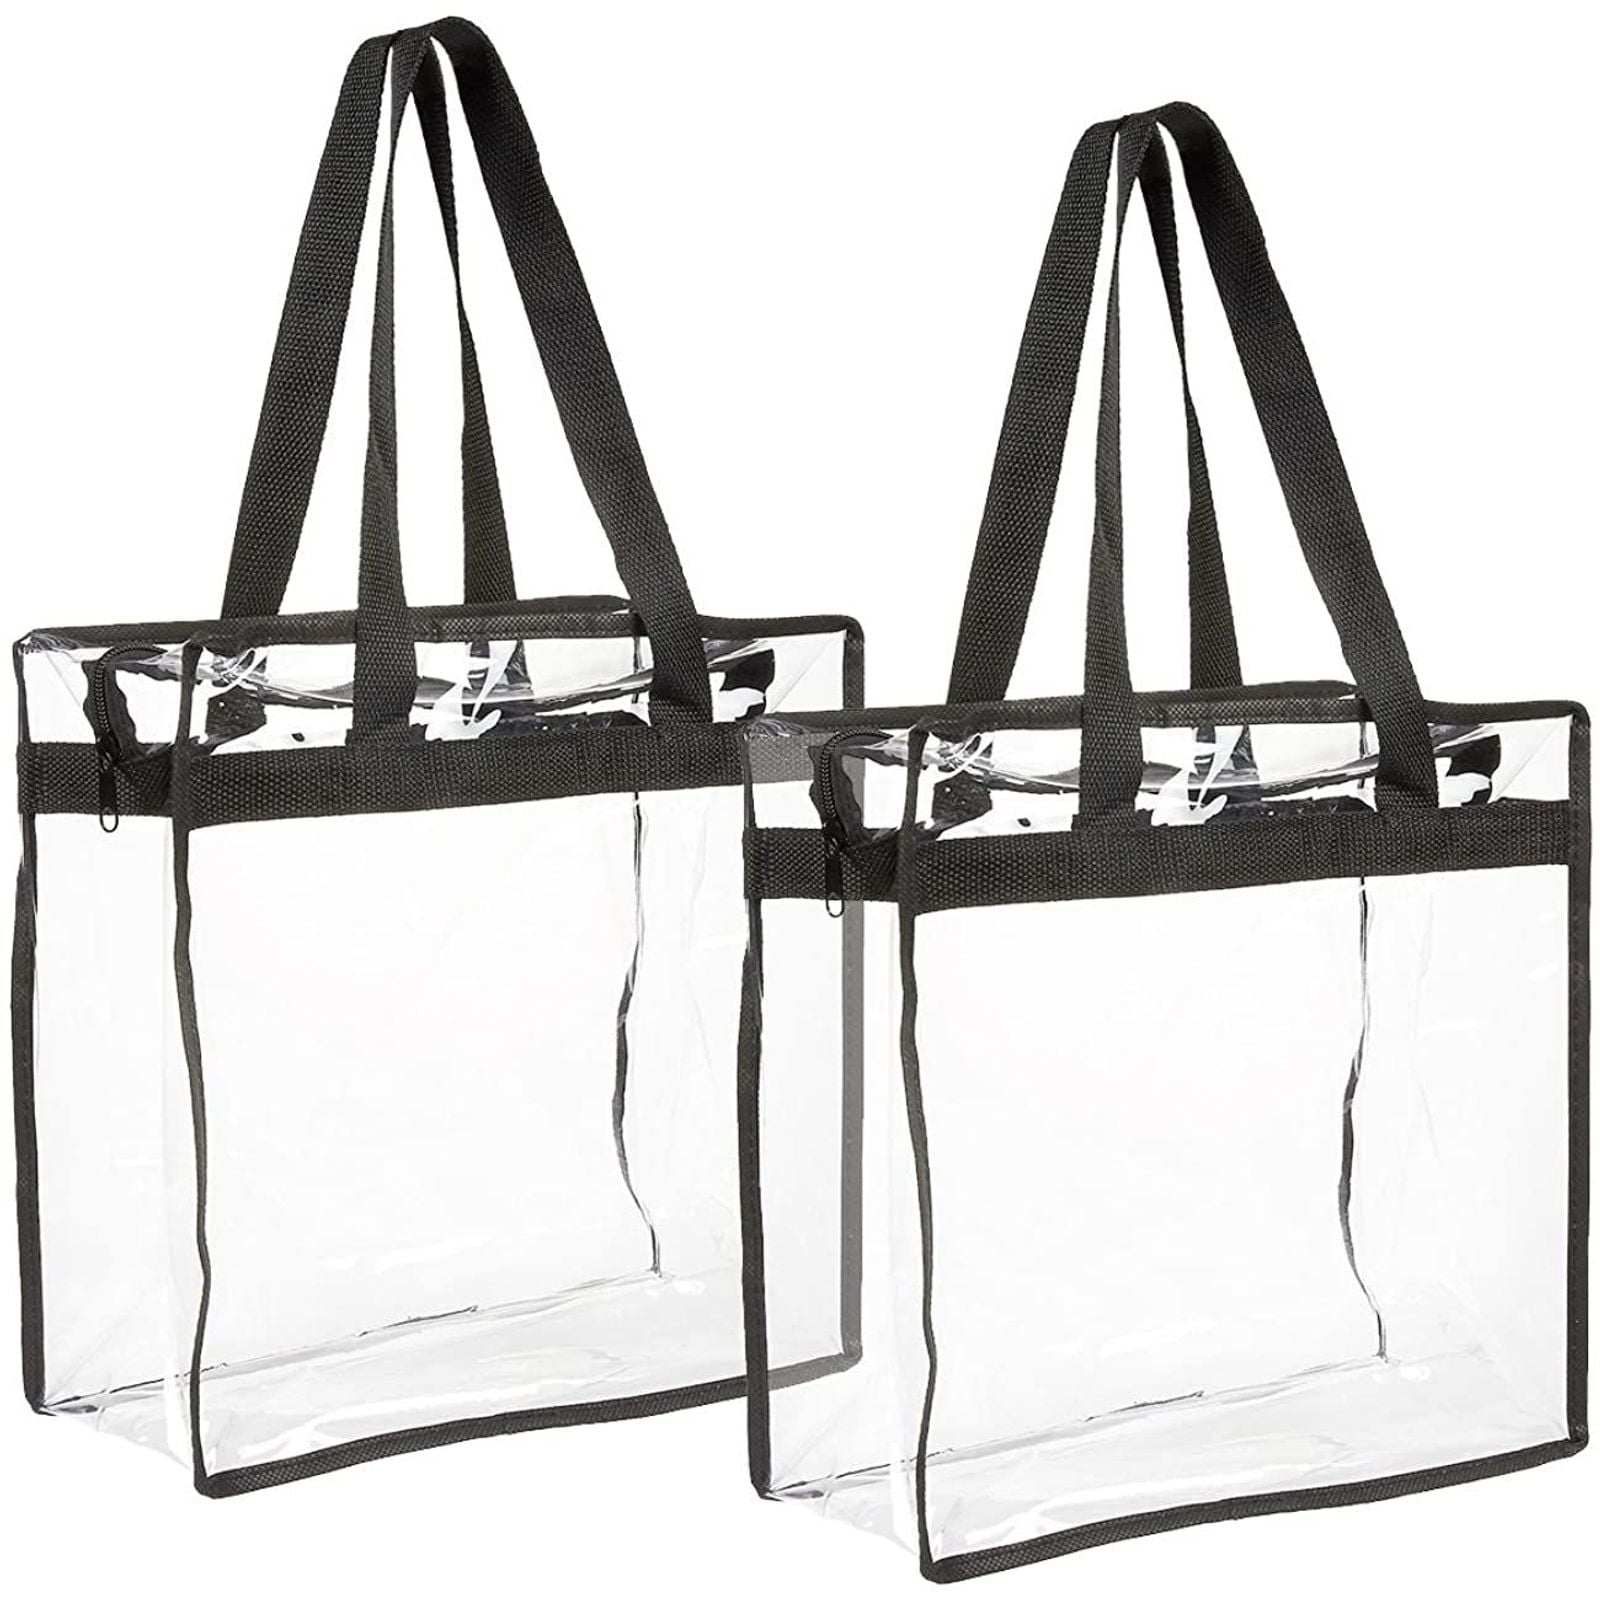 African American Women Tote Bag Shoulder Handbag for Travel Work Beach Shopping Bags with Zipper